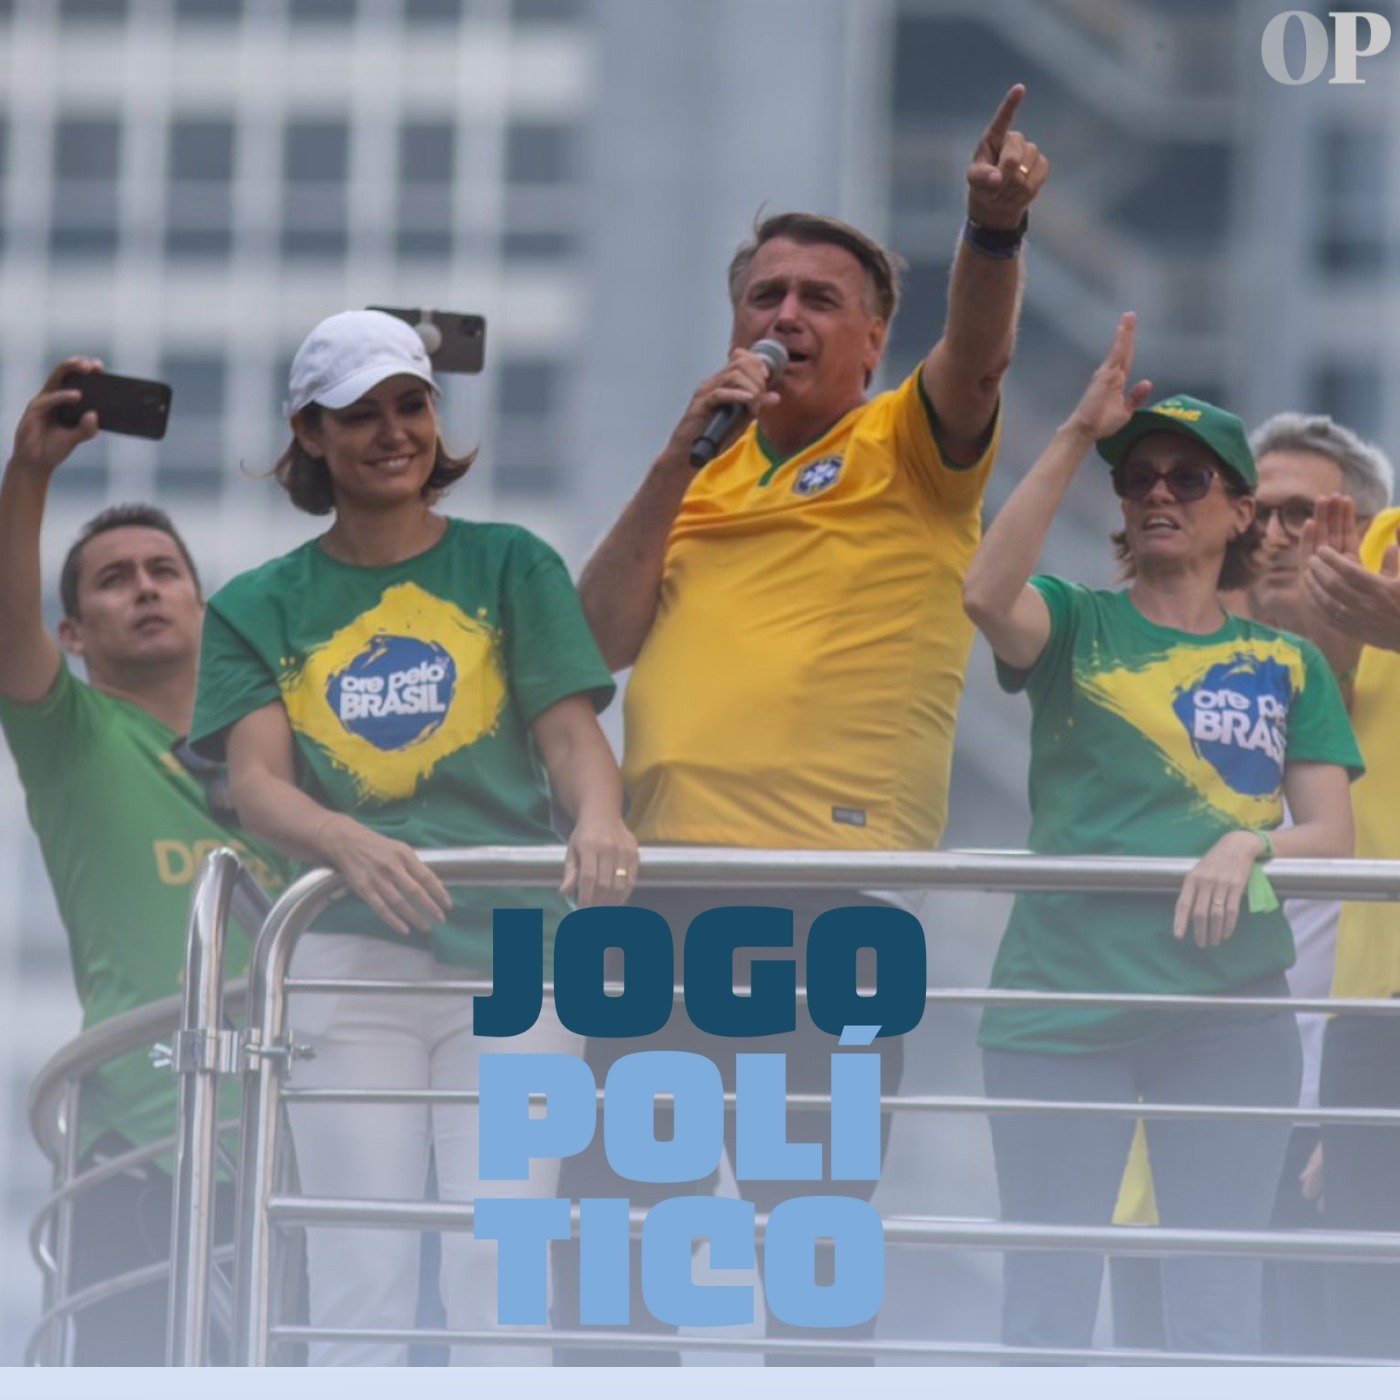 #274 - As consequências do ato de Bolsonaro na Av. Paulista